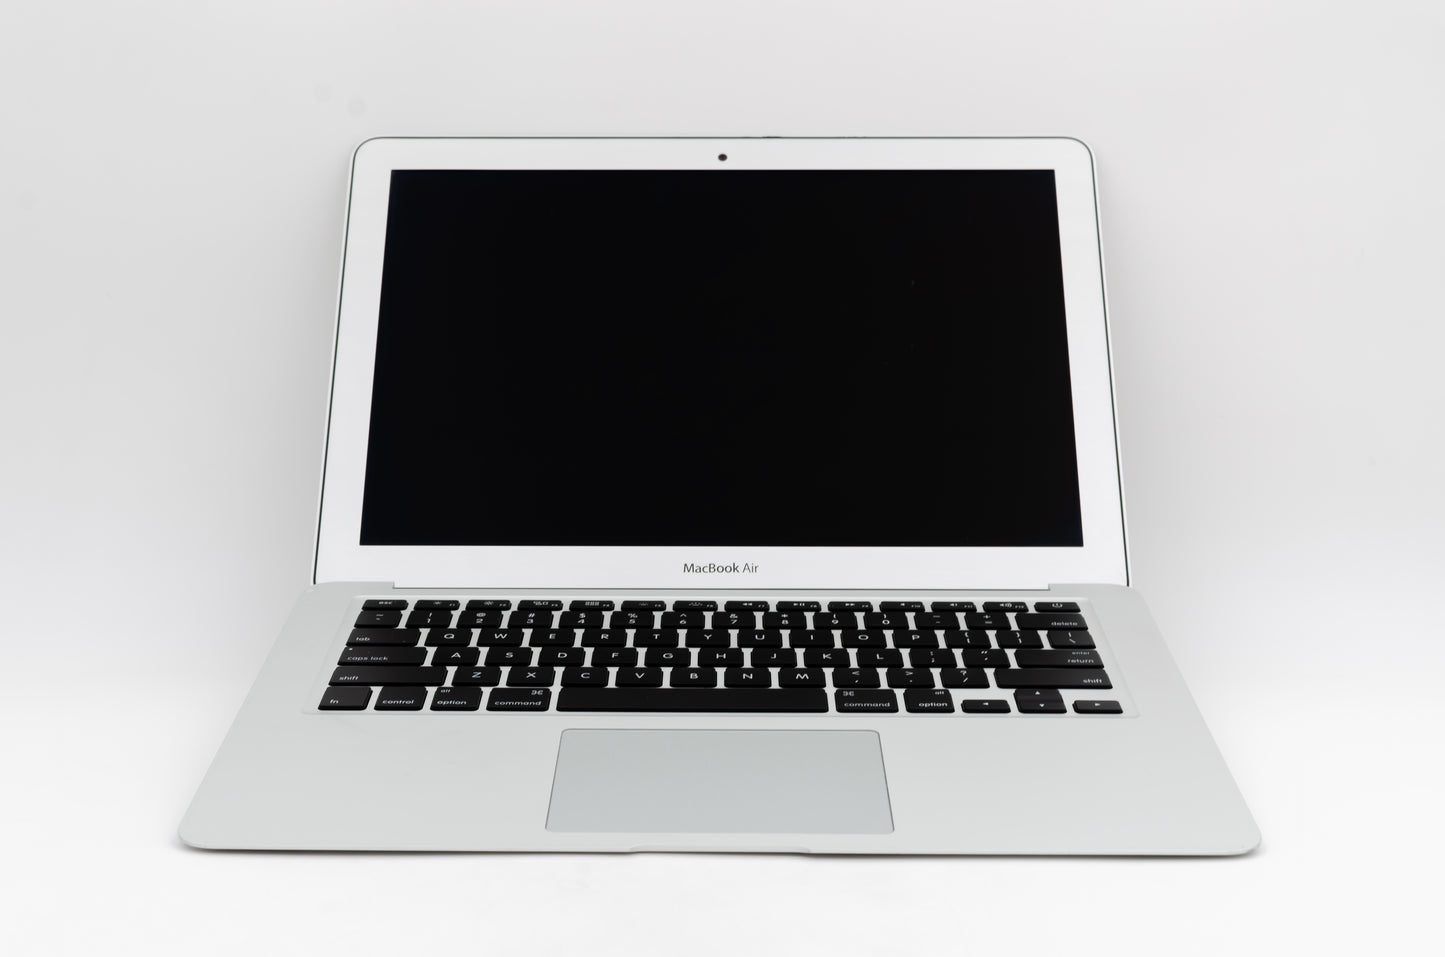 apple-mid-2011-13.3-inch-macbook-air-a1369-aluminum-dci7 - 1.8ghz processor, 4gb ram, hd 3000 - 348mb gpu-mc965ll/a-4